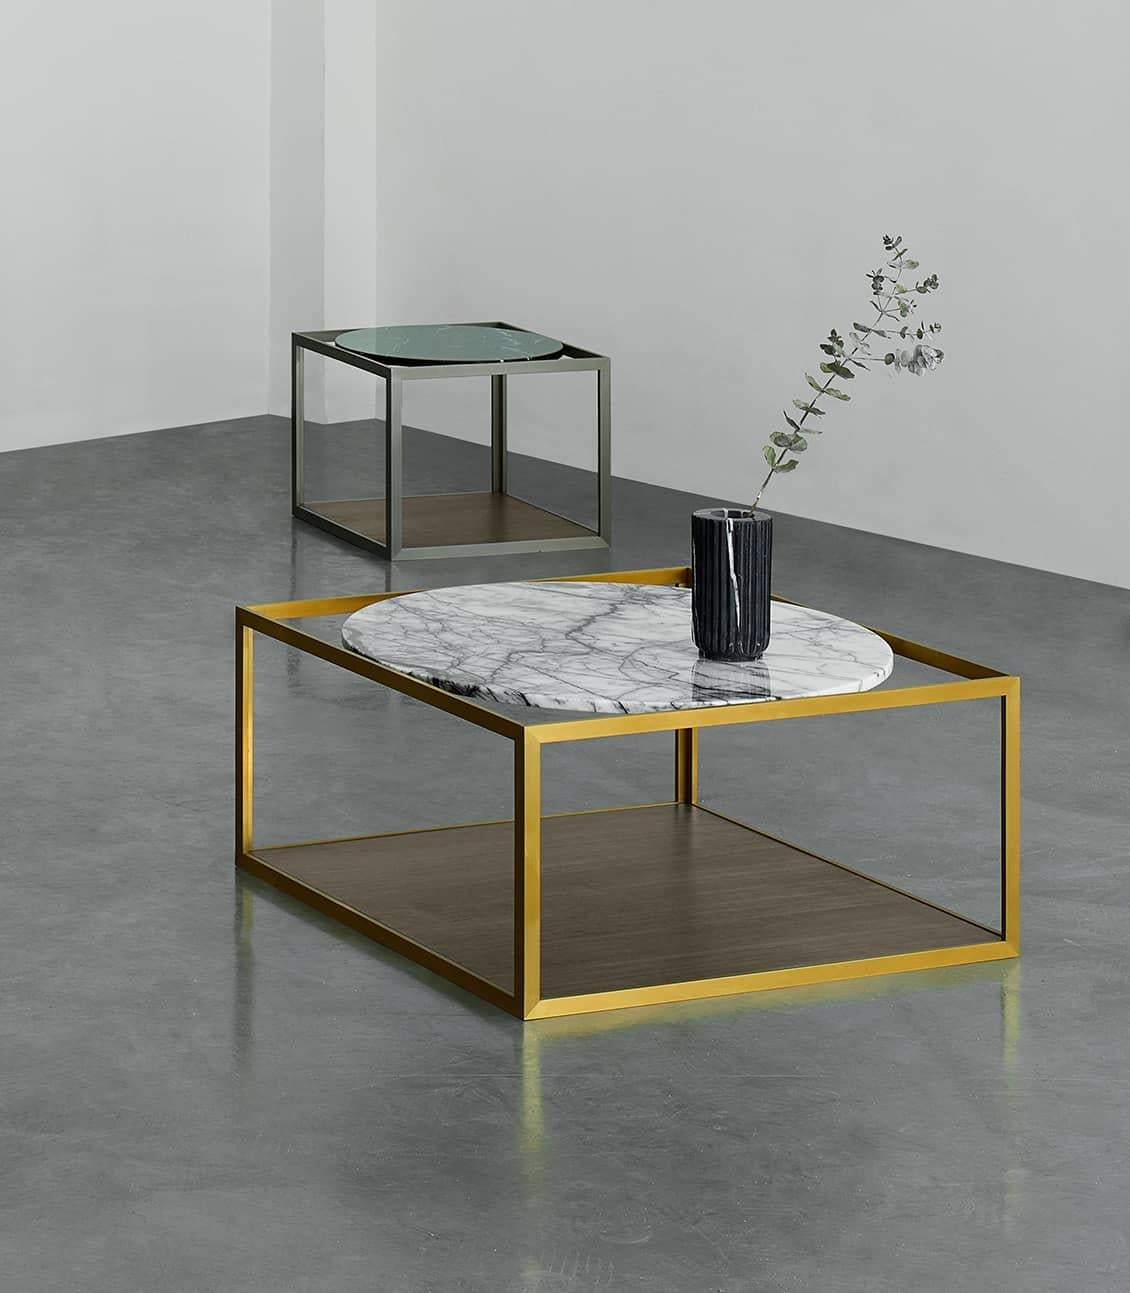 NORDST GAARD Coffee Table, Italian White Mountain Marble, Danish Modern Design For Sale 1